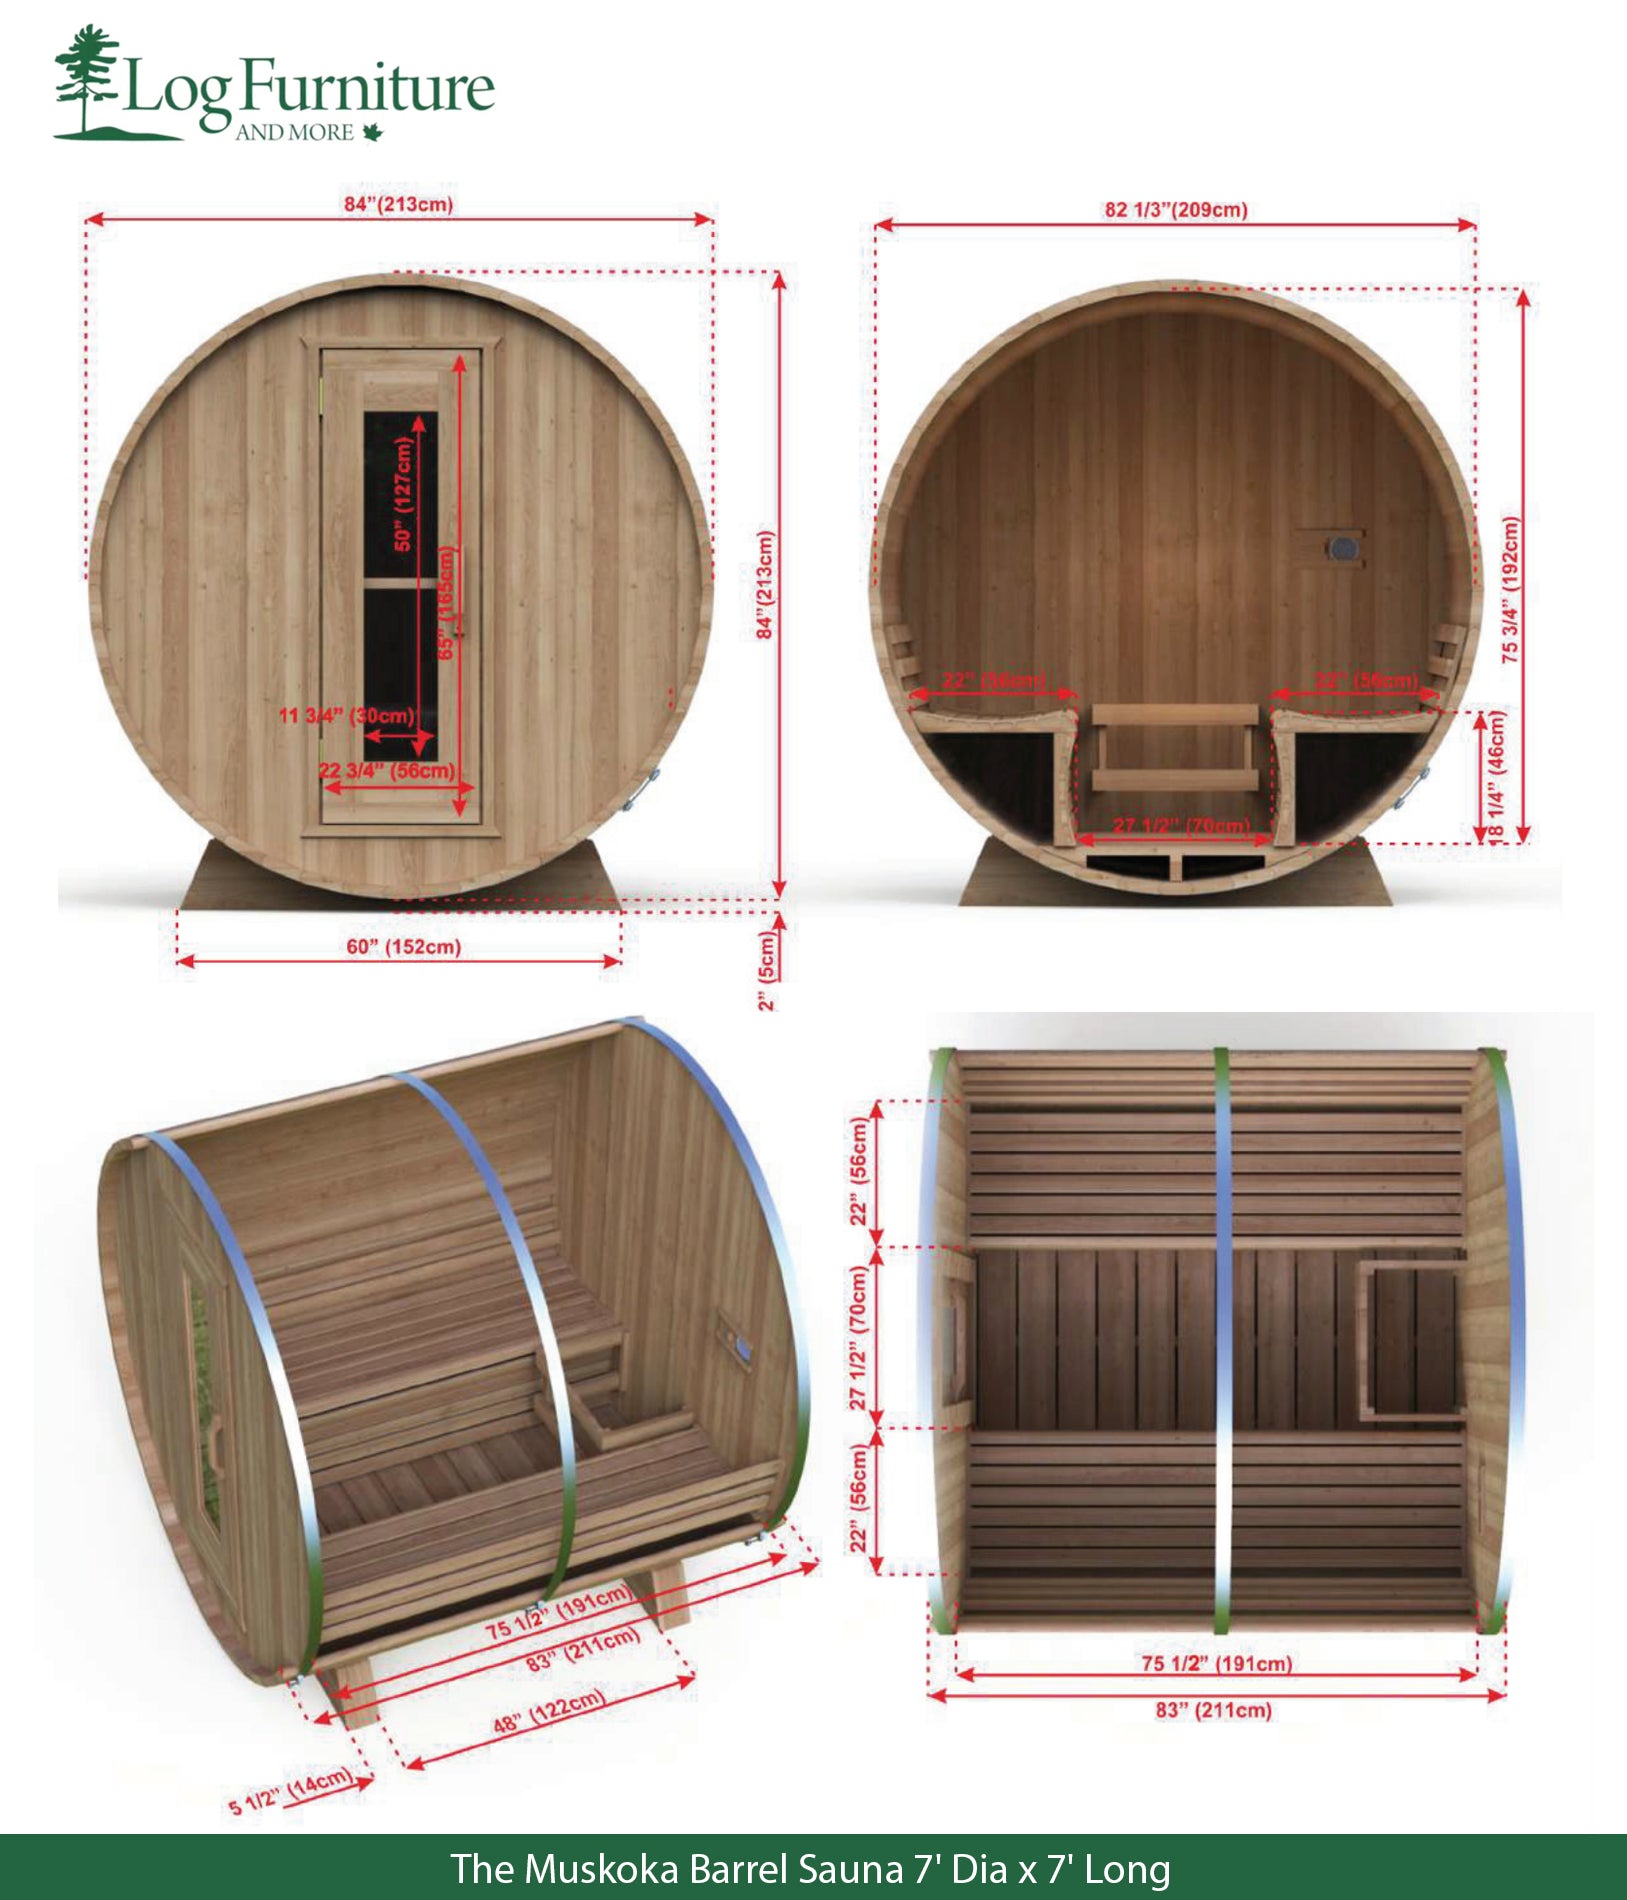 The Muskoka Barrel Sauna 7' Dia x 7' Long